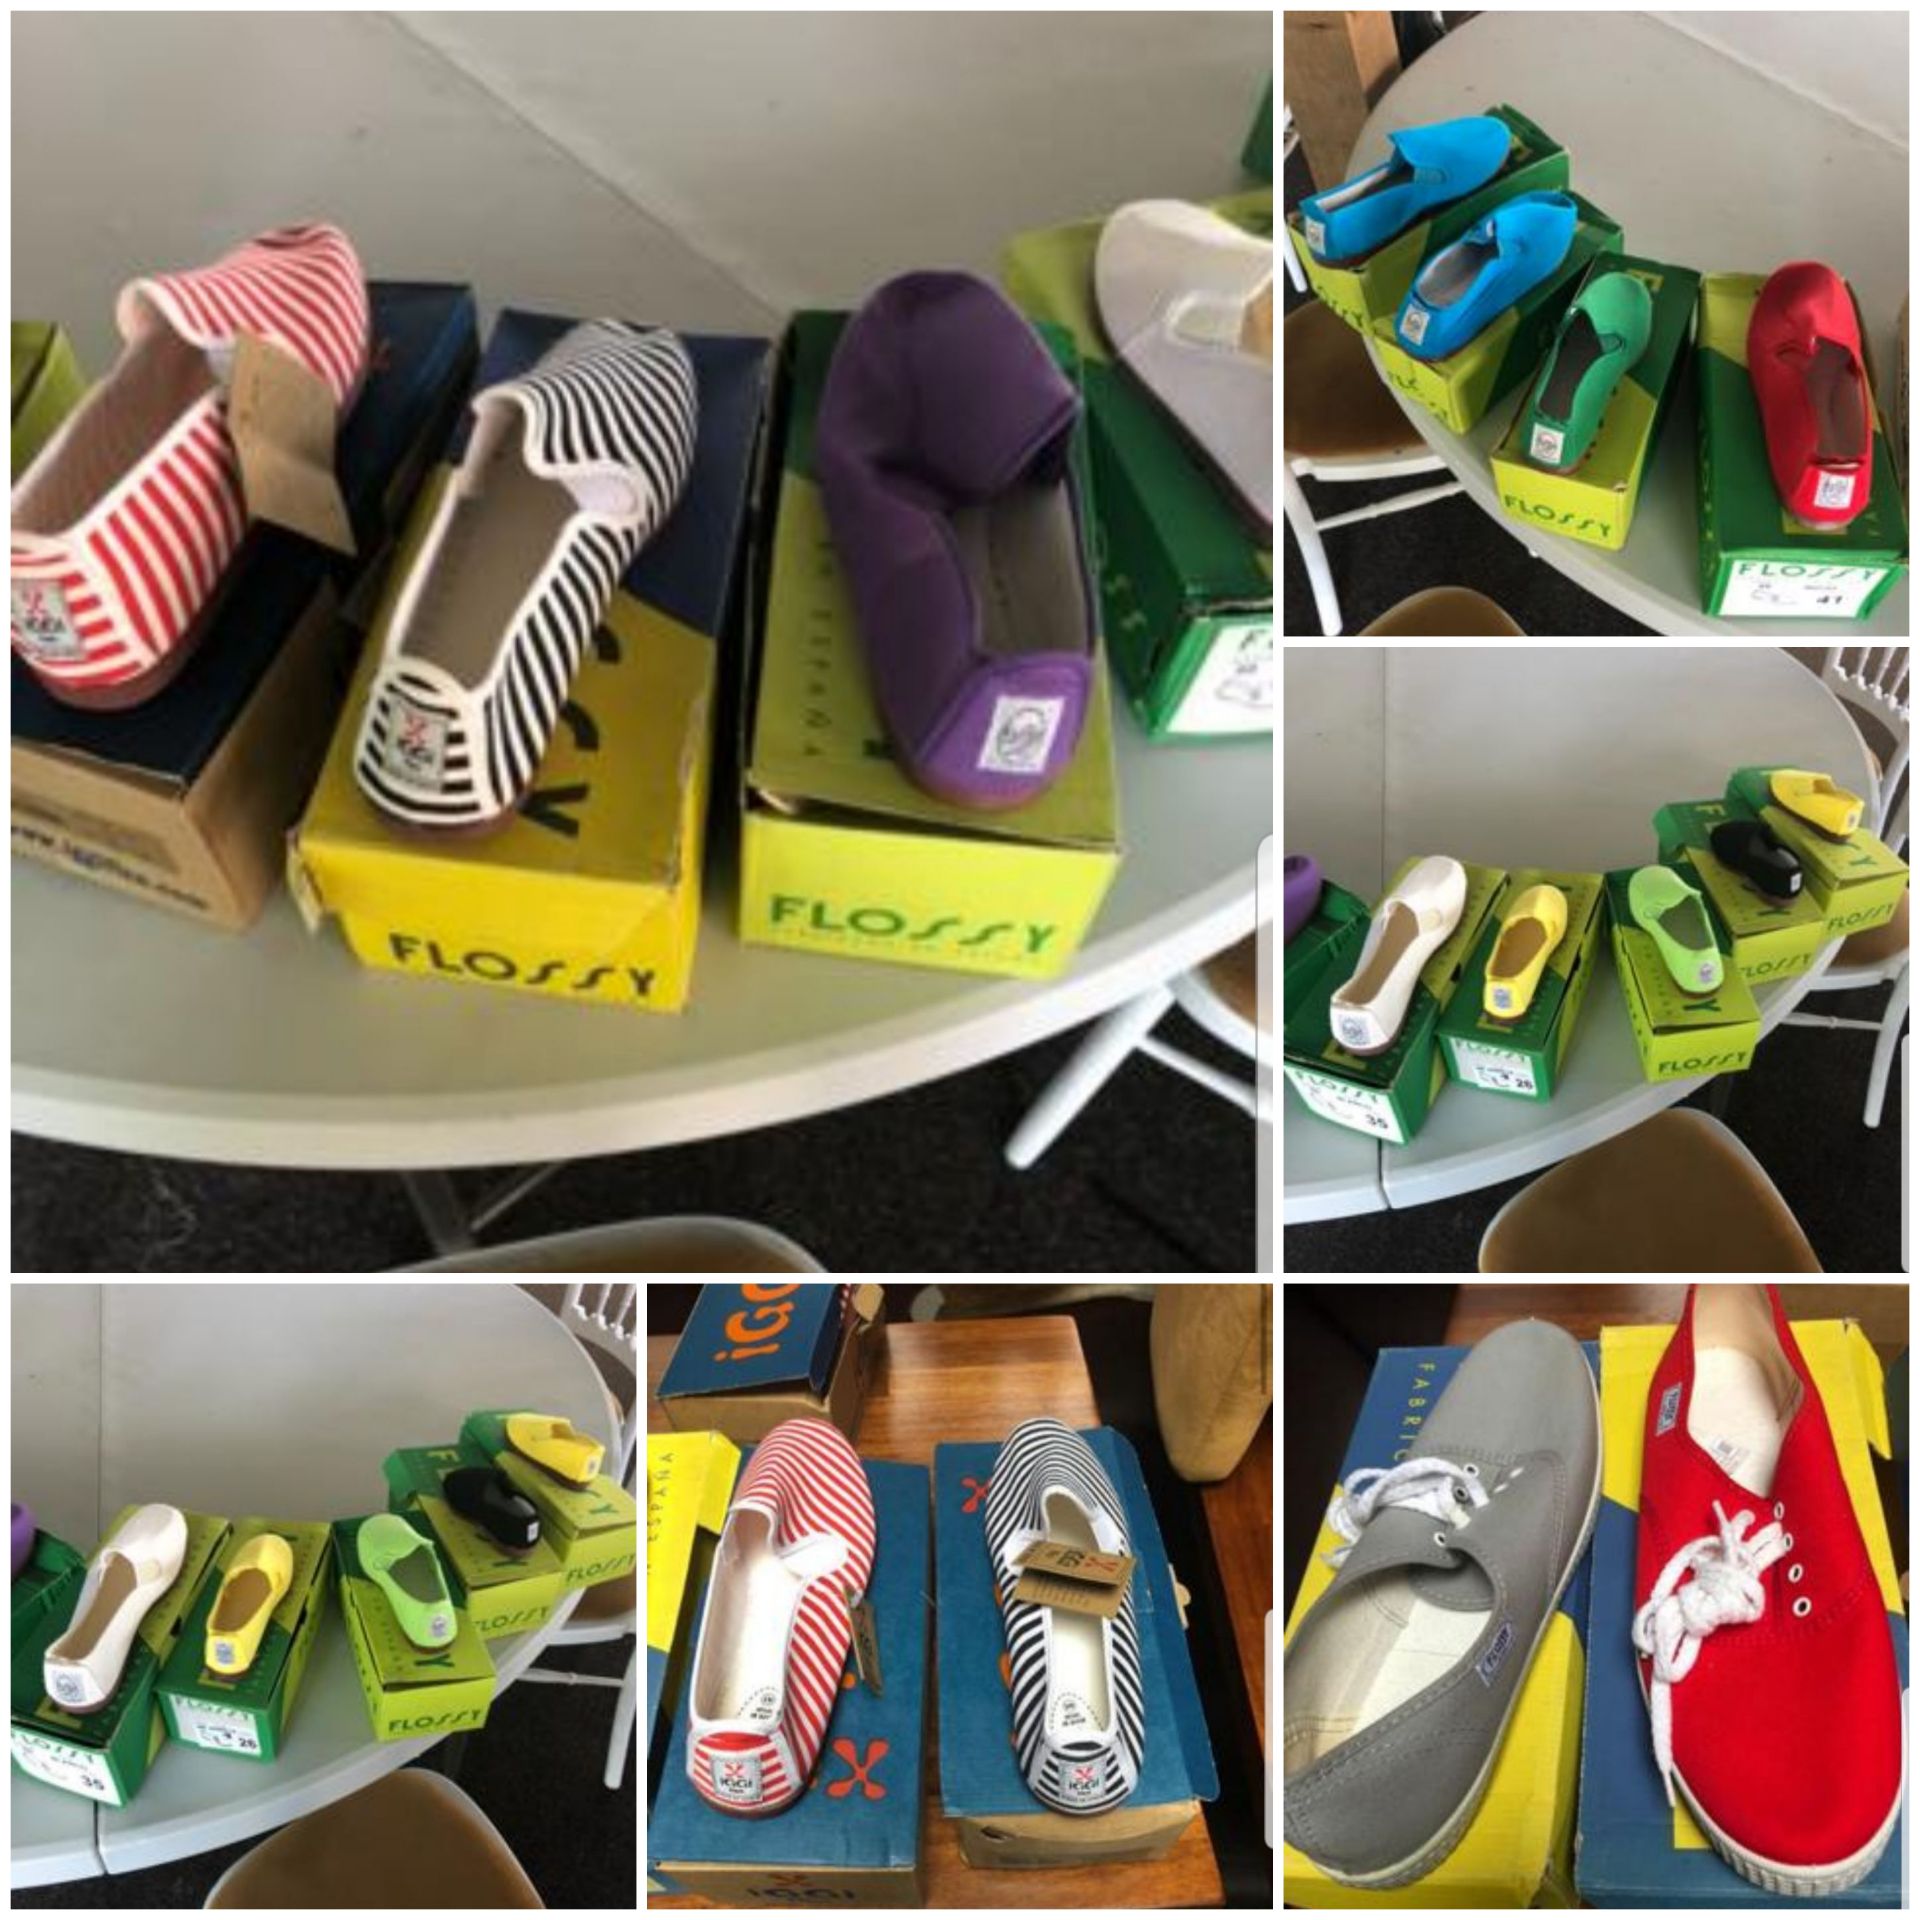 Flossy brand kids toms design footwear deal - Image 2 of 4